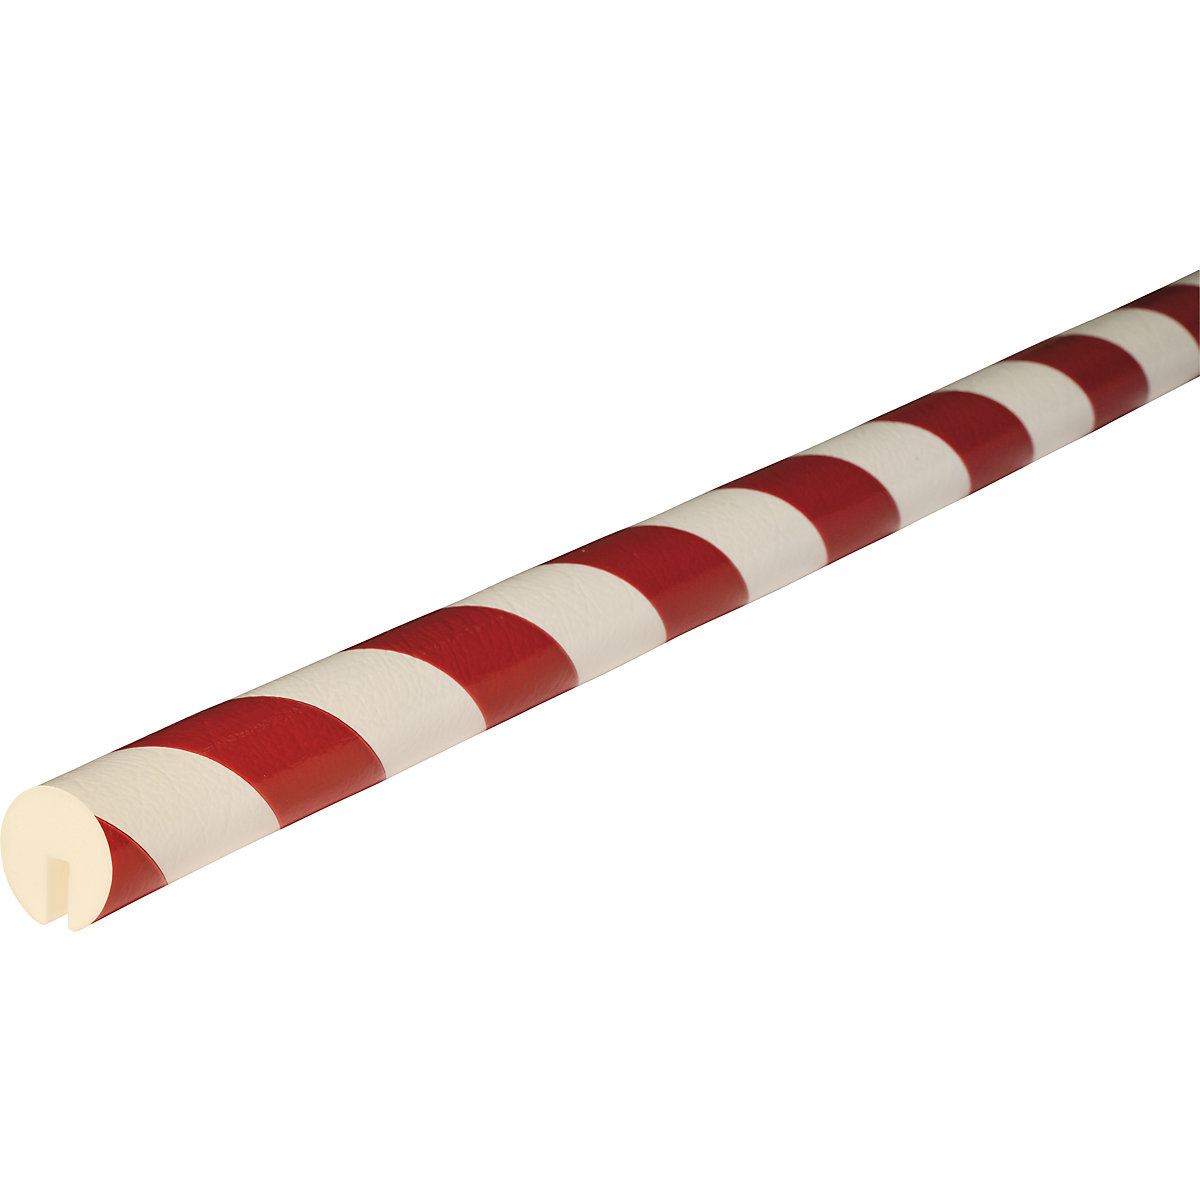 SHG Knuffi® Kantenschutz, Typ B, 1 Rolle à 5 m, rot / weiß